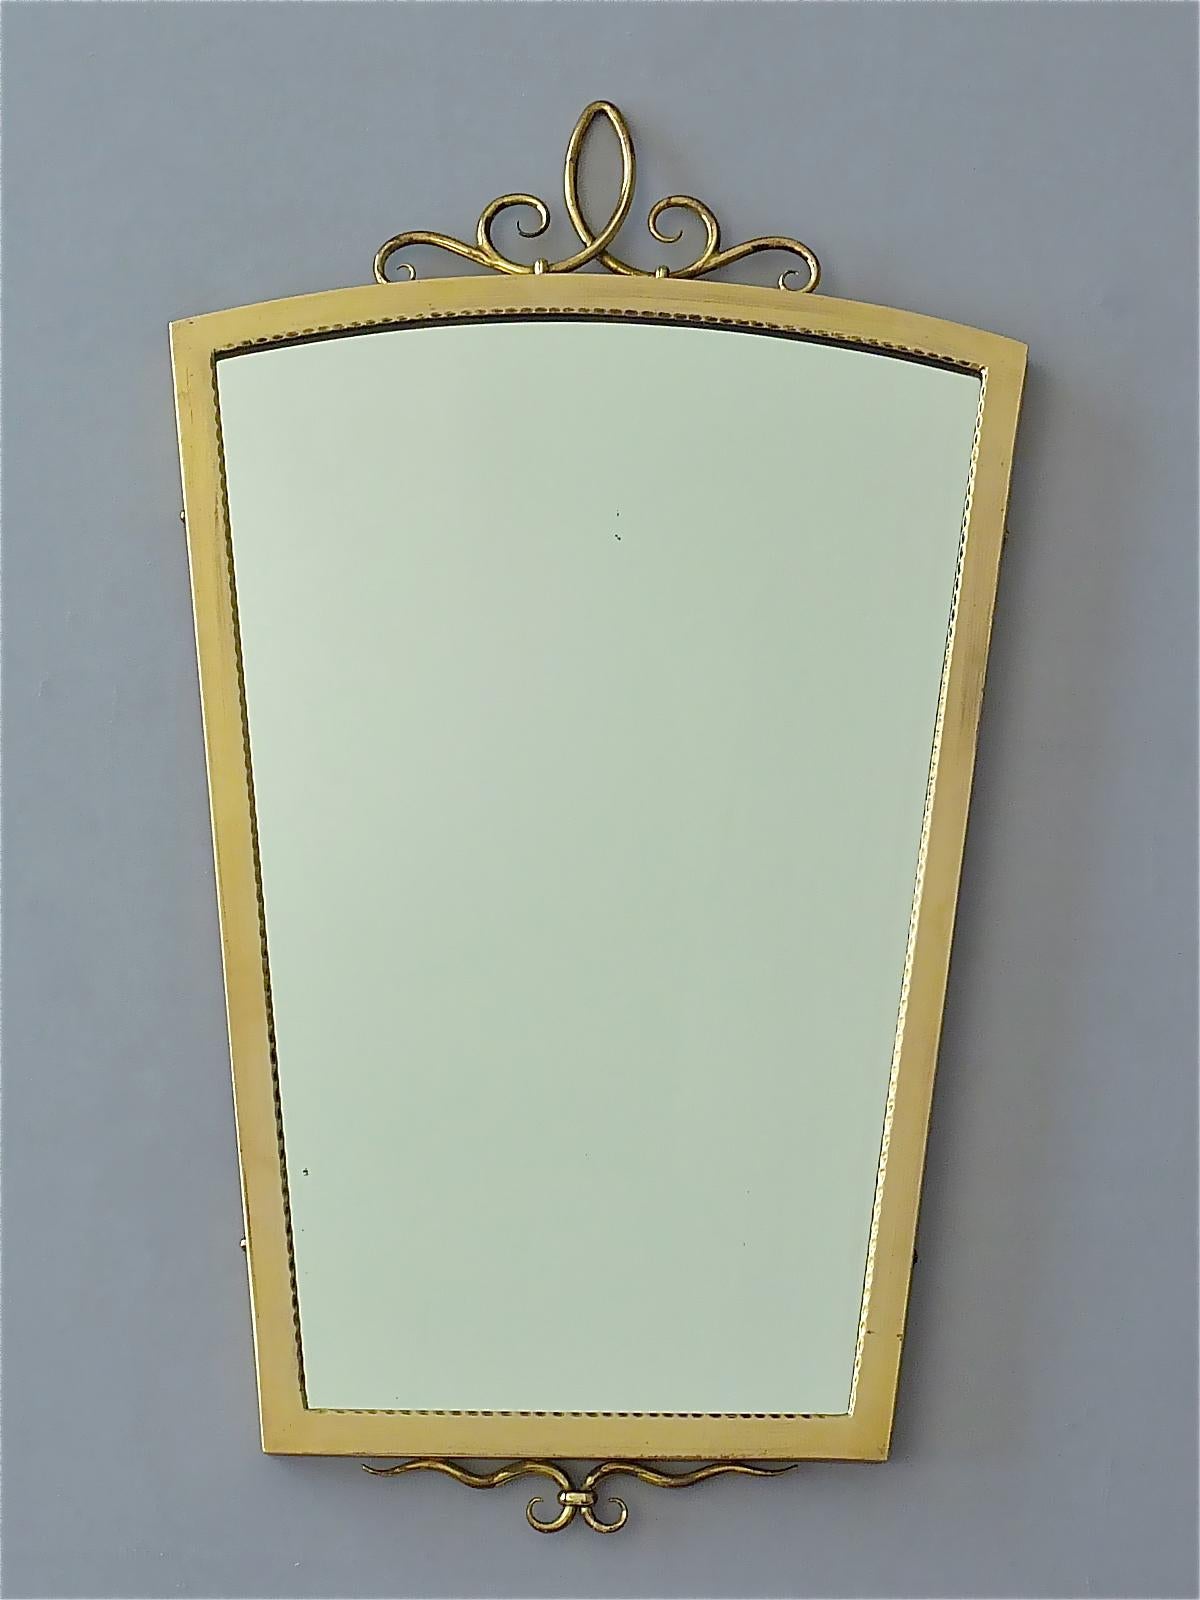 Rare Midcentury Gio Ponti attribution Italian Wall Mirror Gilt Brass Glass 1950s For Sale 7